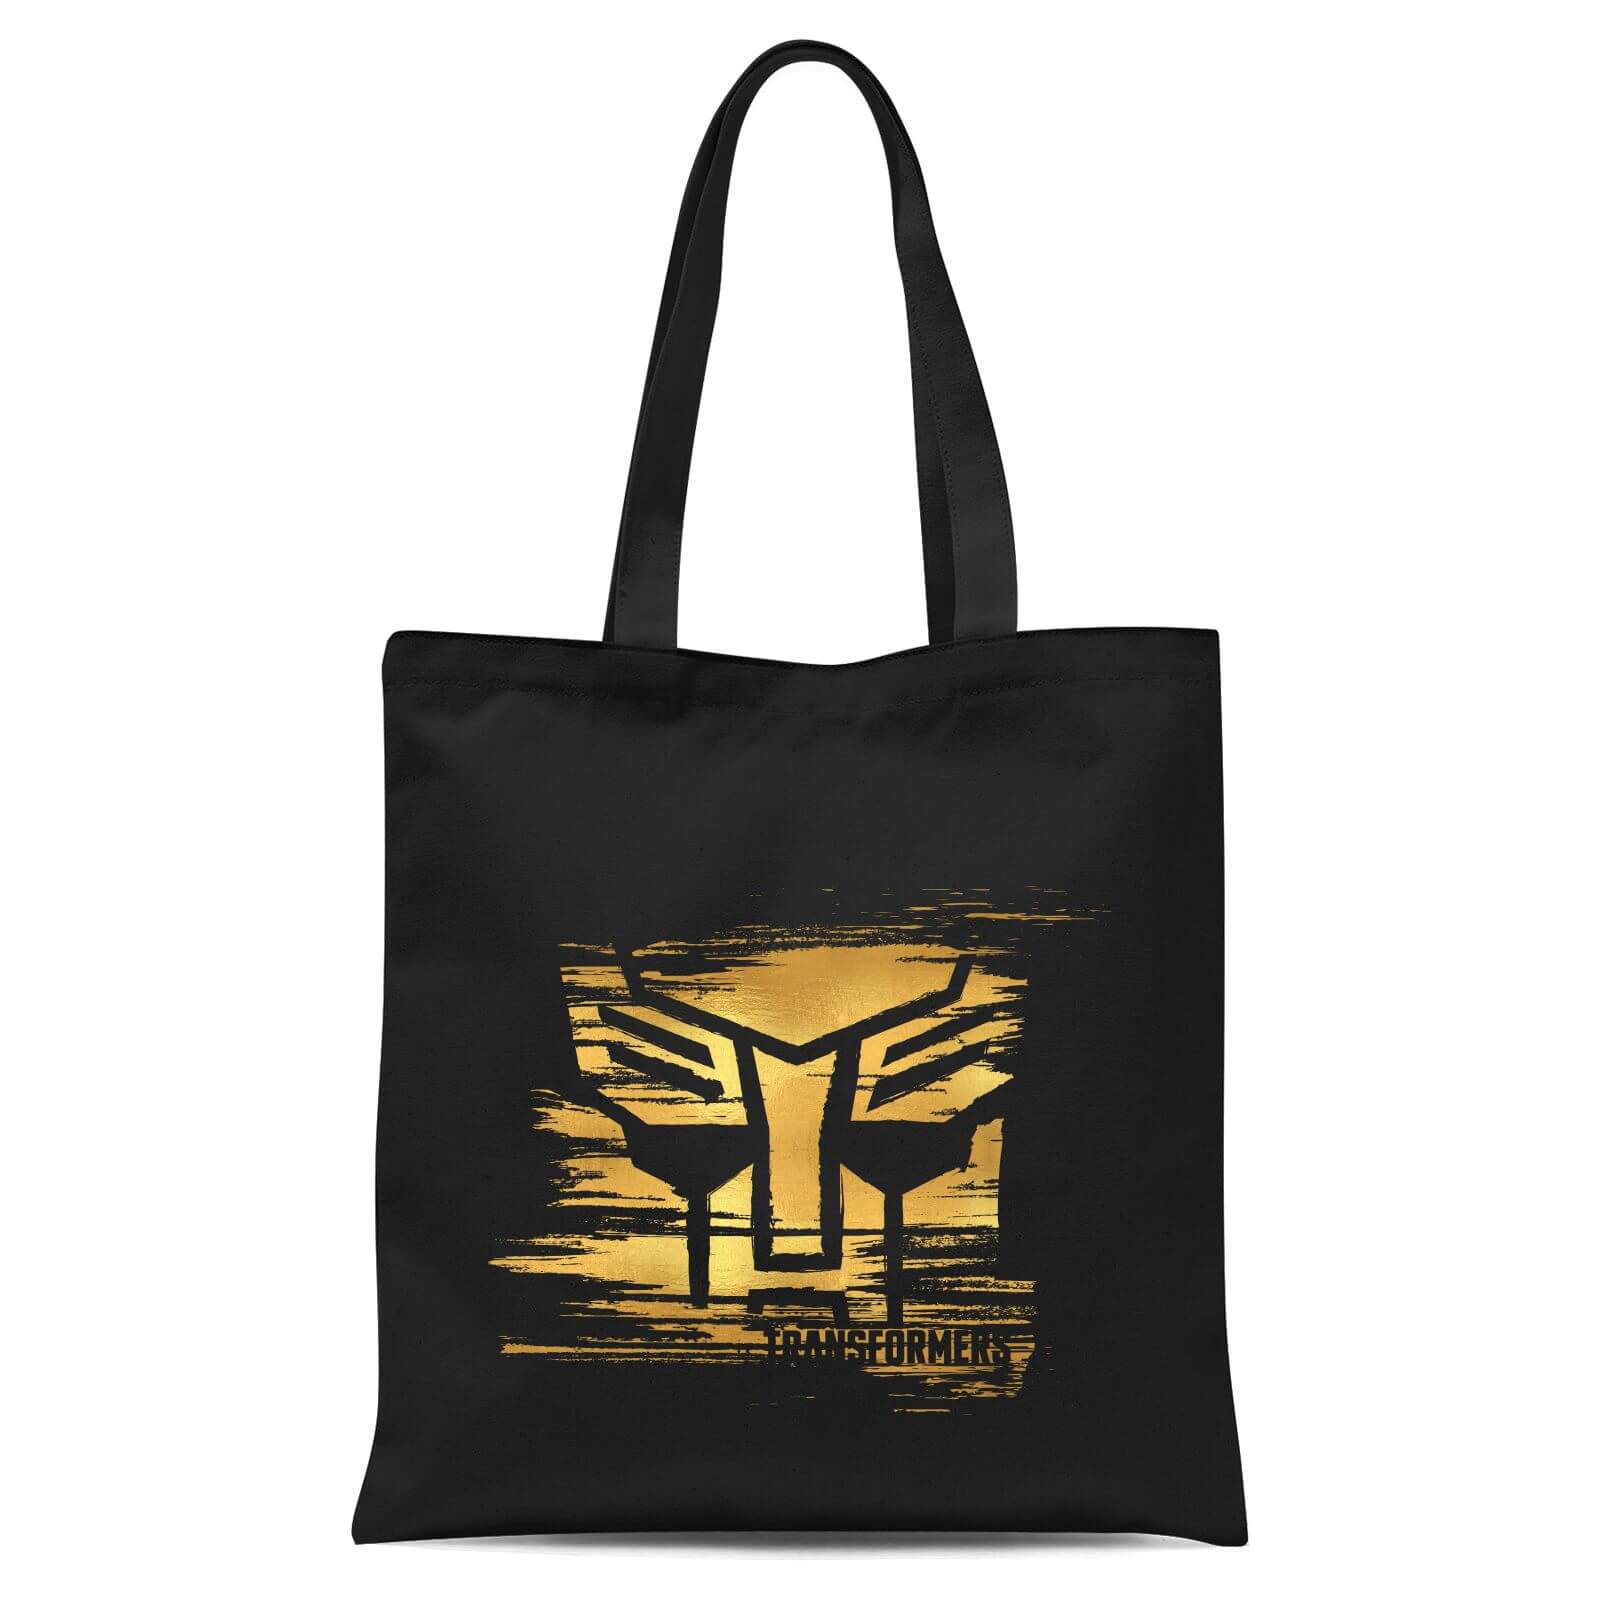 Transformers Gold Autobot Symbol Tote Bag - Black